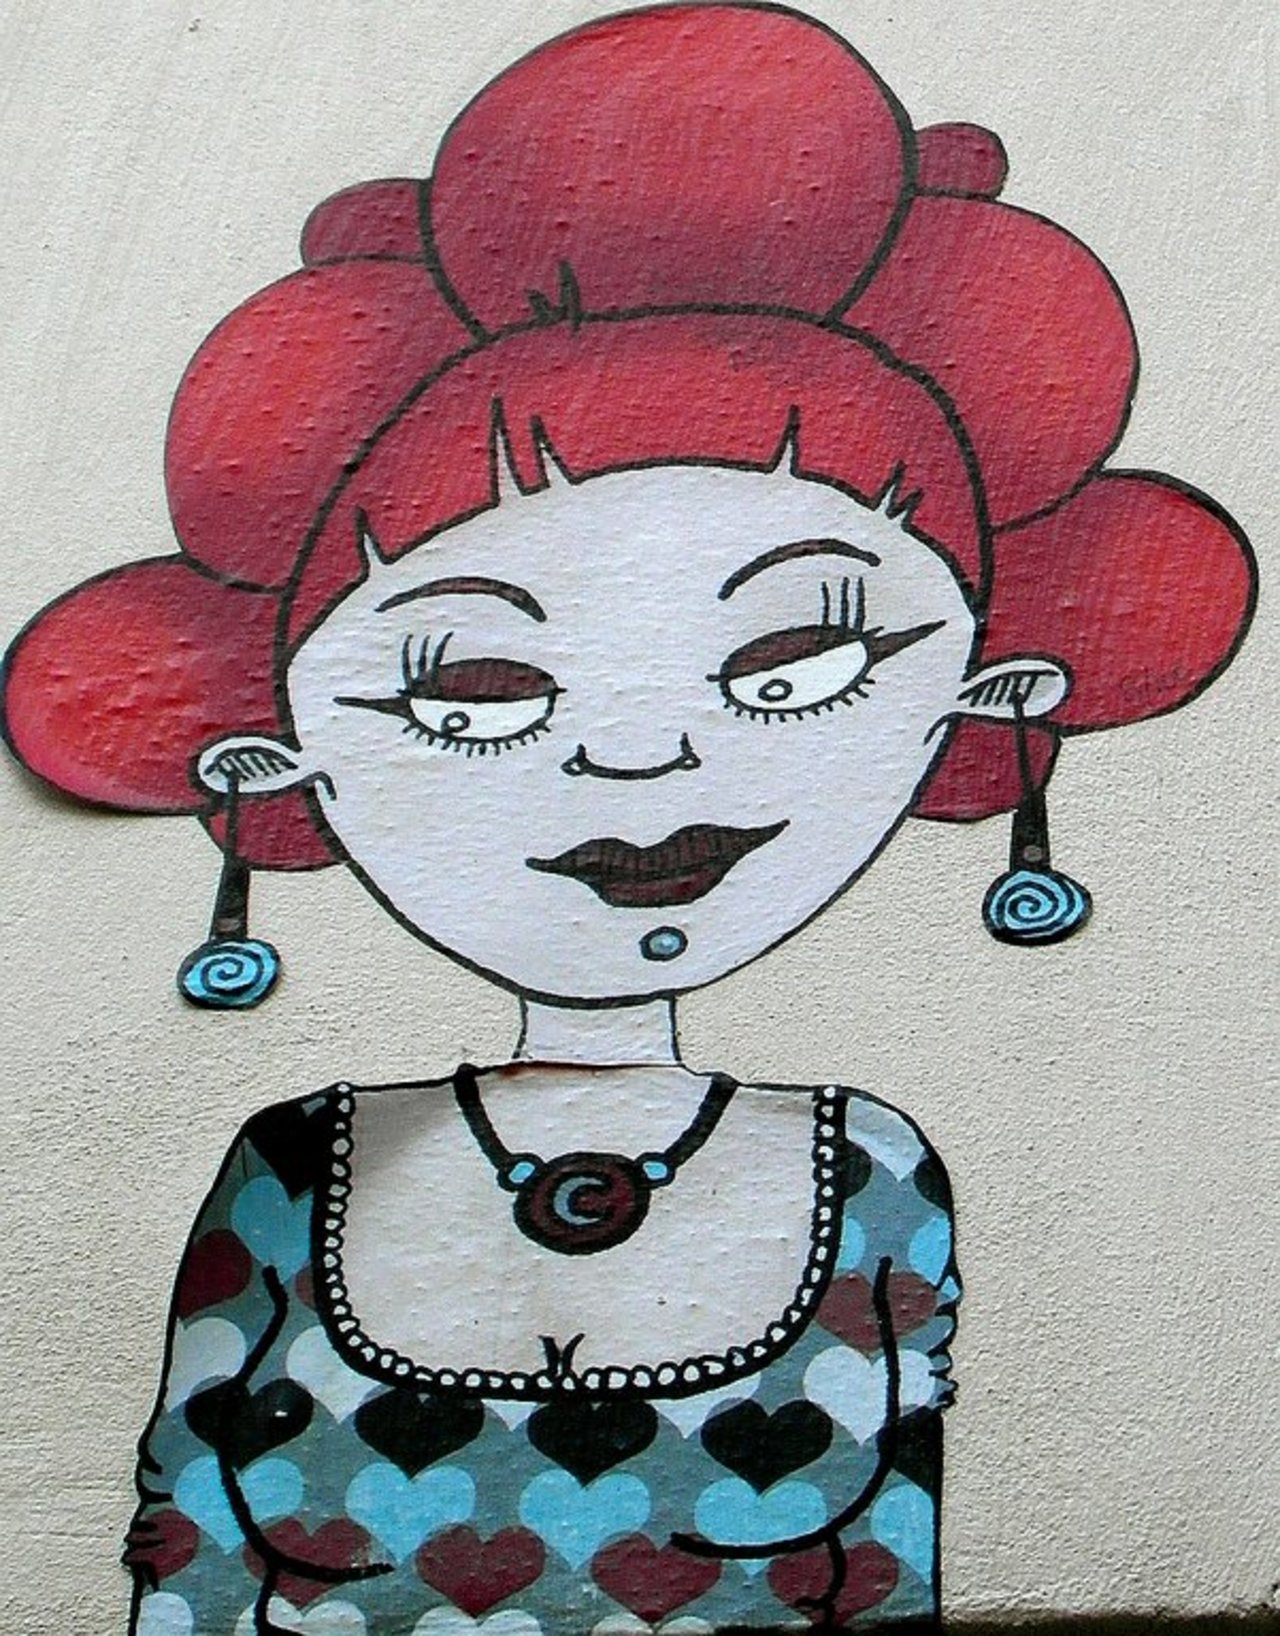 Street Art by anonymous in #Paris http://www.urbacolors.com #art #mural #graffiti #streetart https://t.co/KQ4TyCT8se